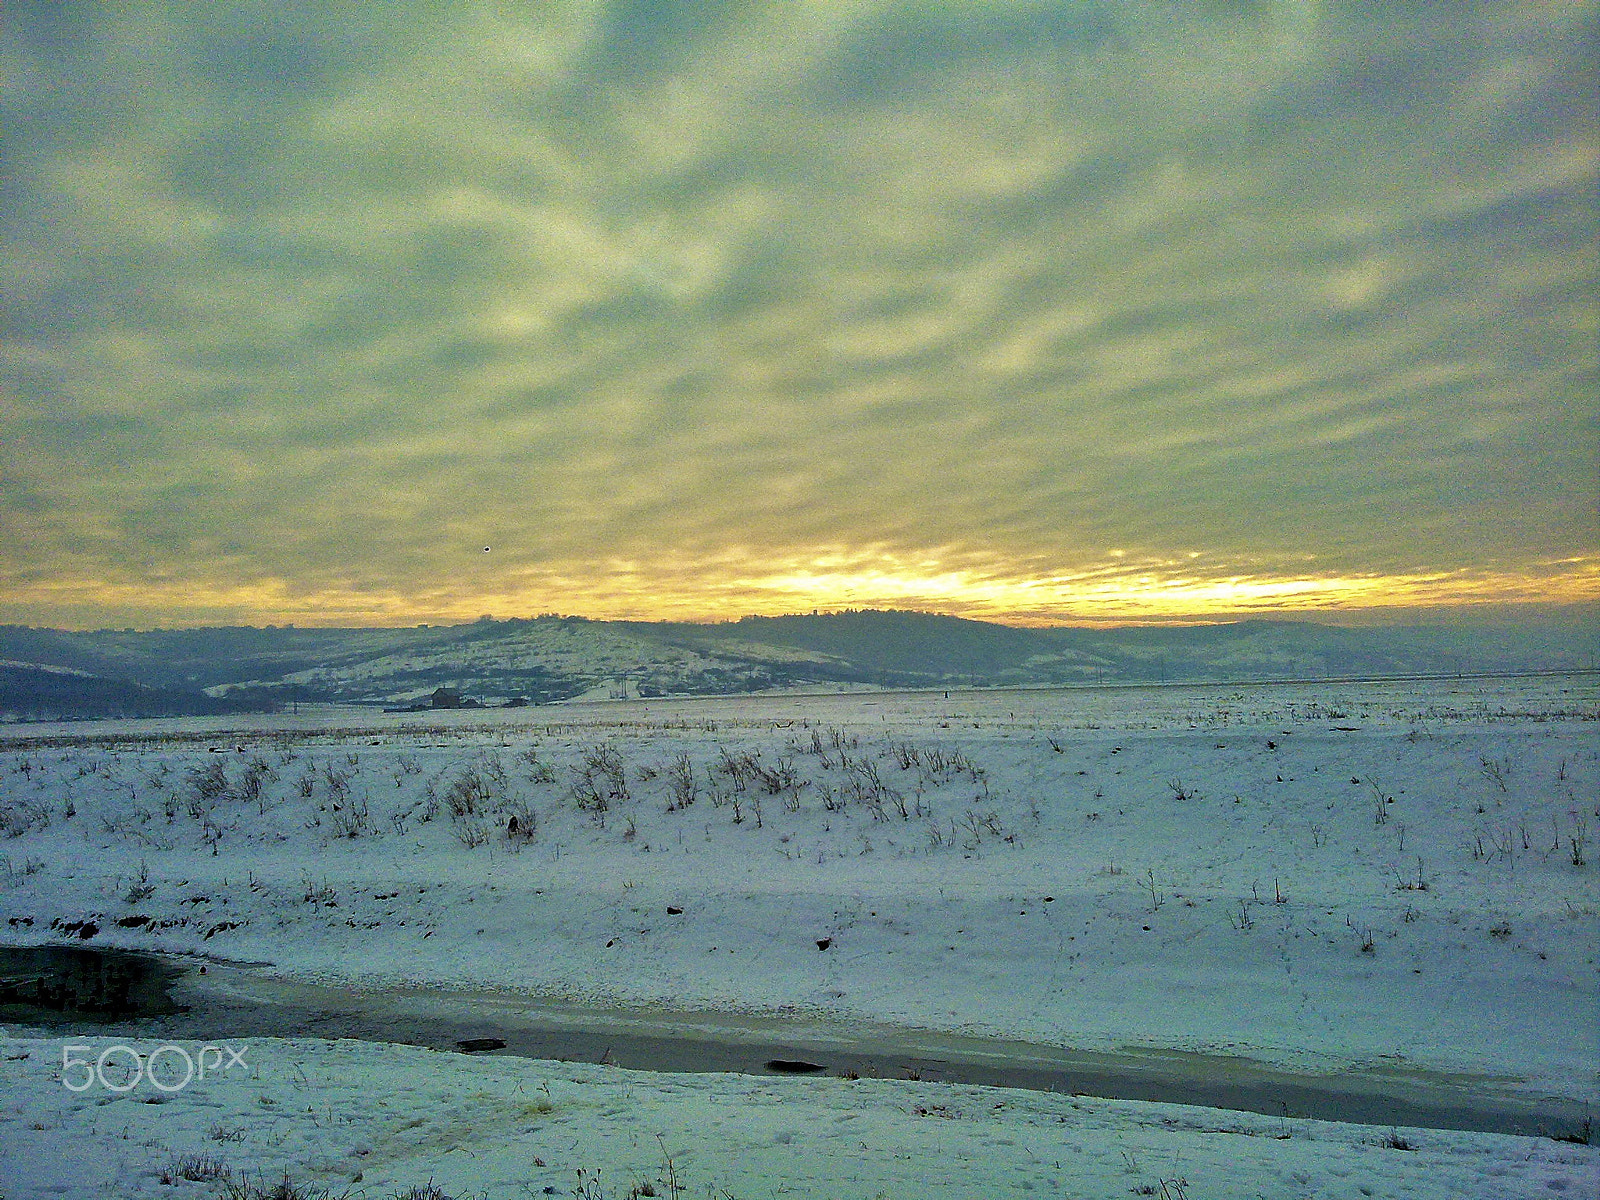 Nokia N97 sample photo. Winter sunset photography